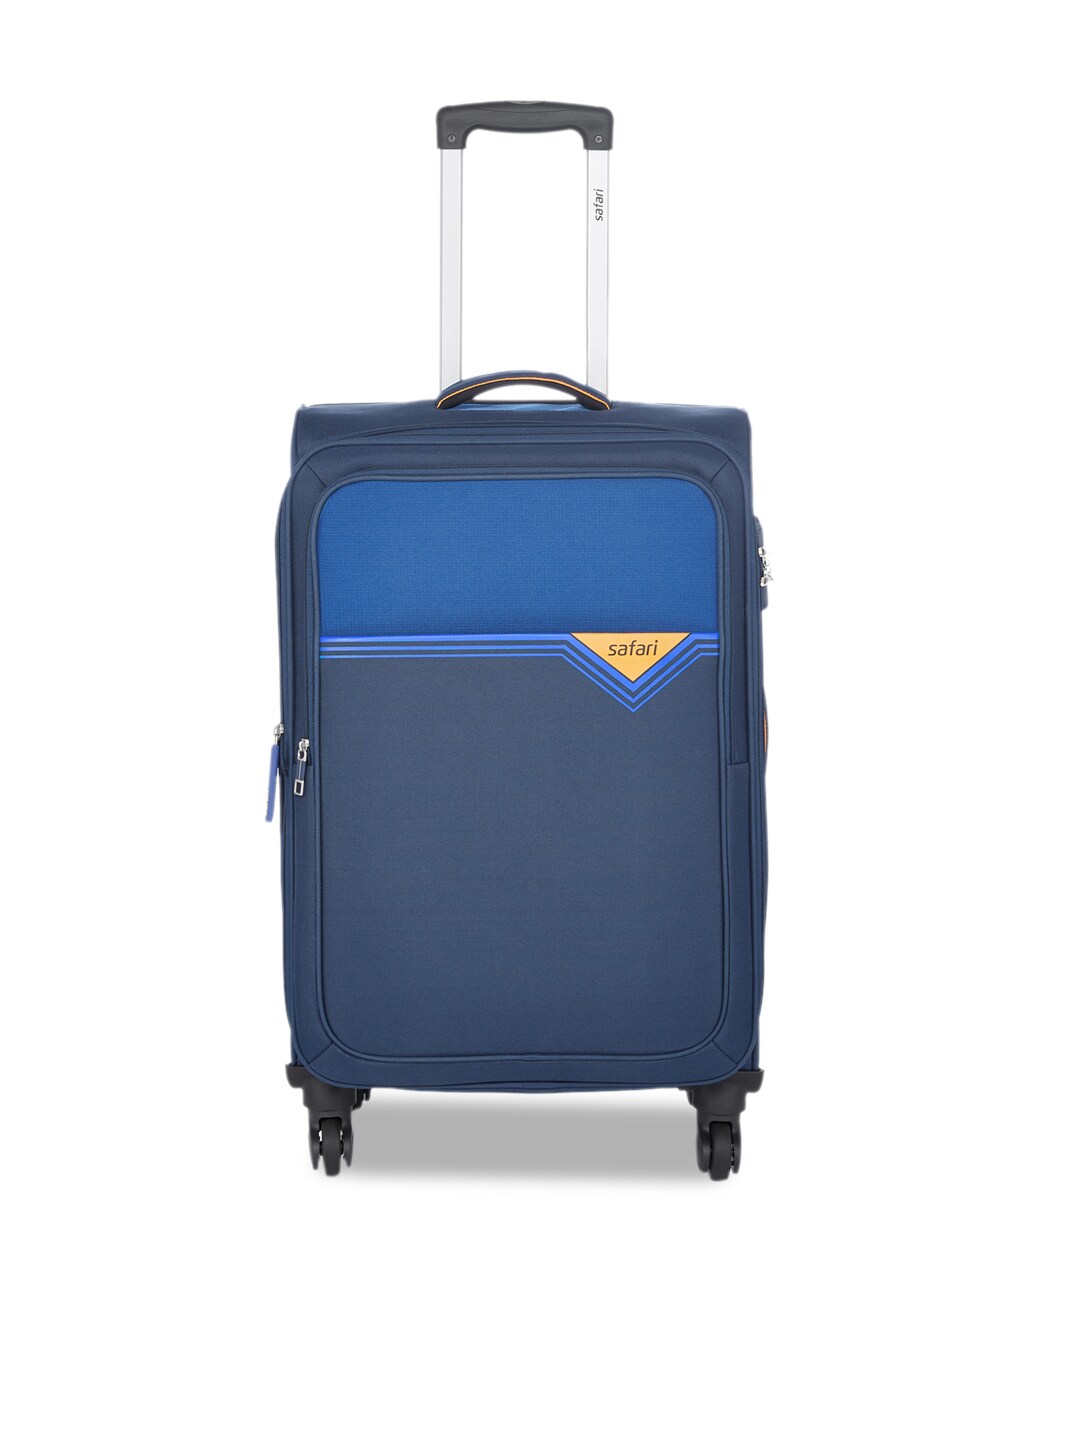 Safari Unisex Blue Colourblocked Cabin Trolley Suitcase Price in India